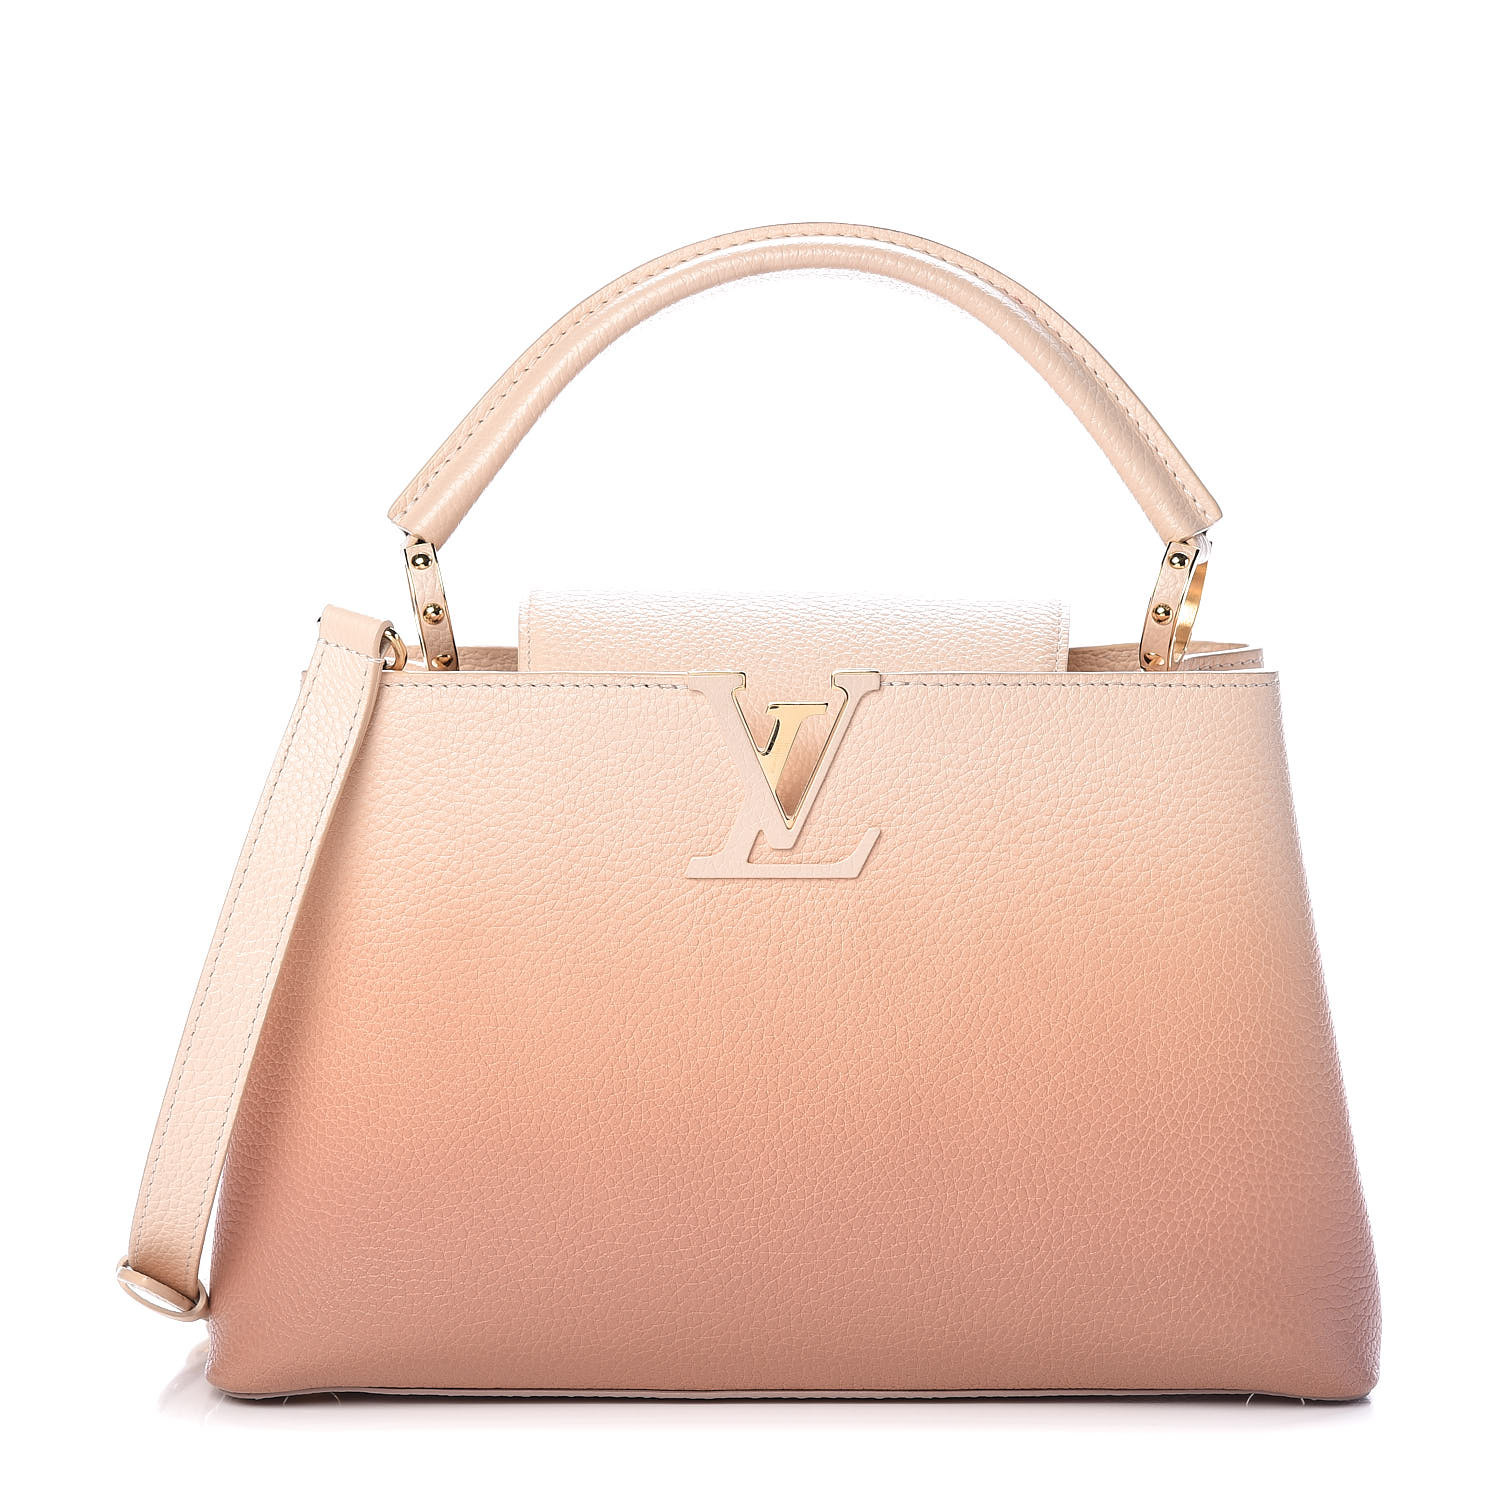 Louis Vuitton Capucines Handbag 339737